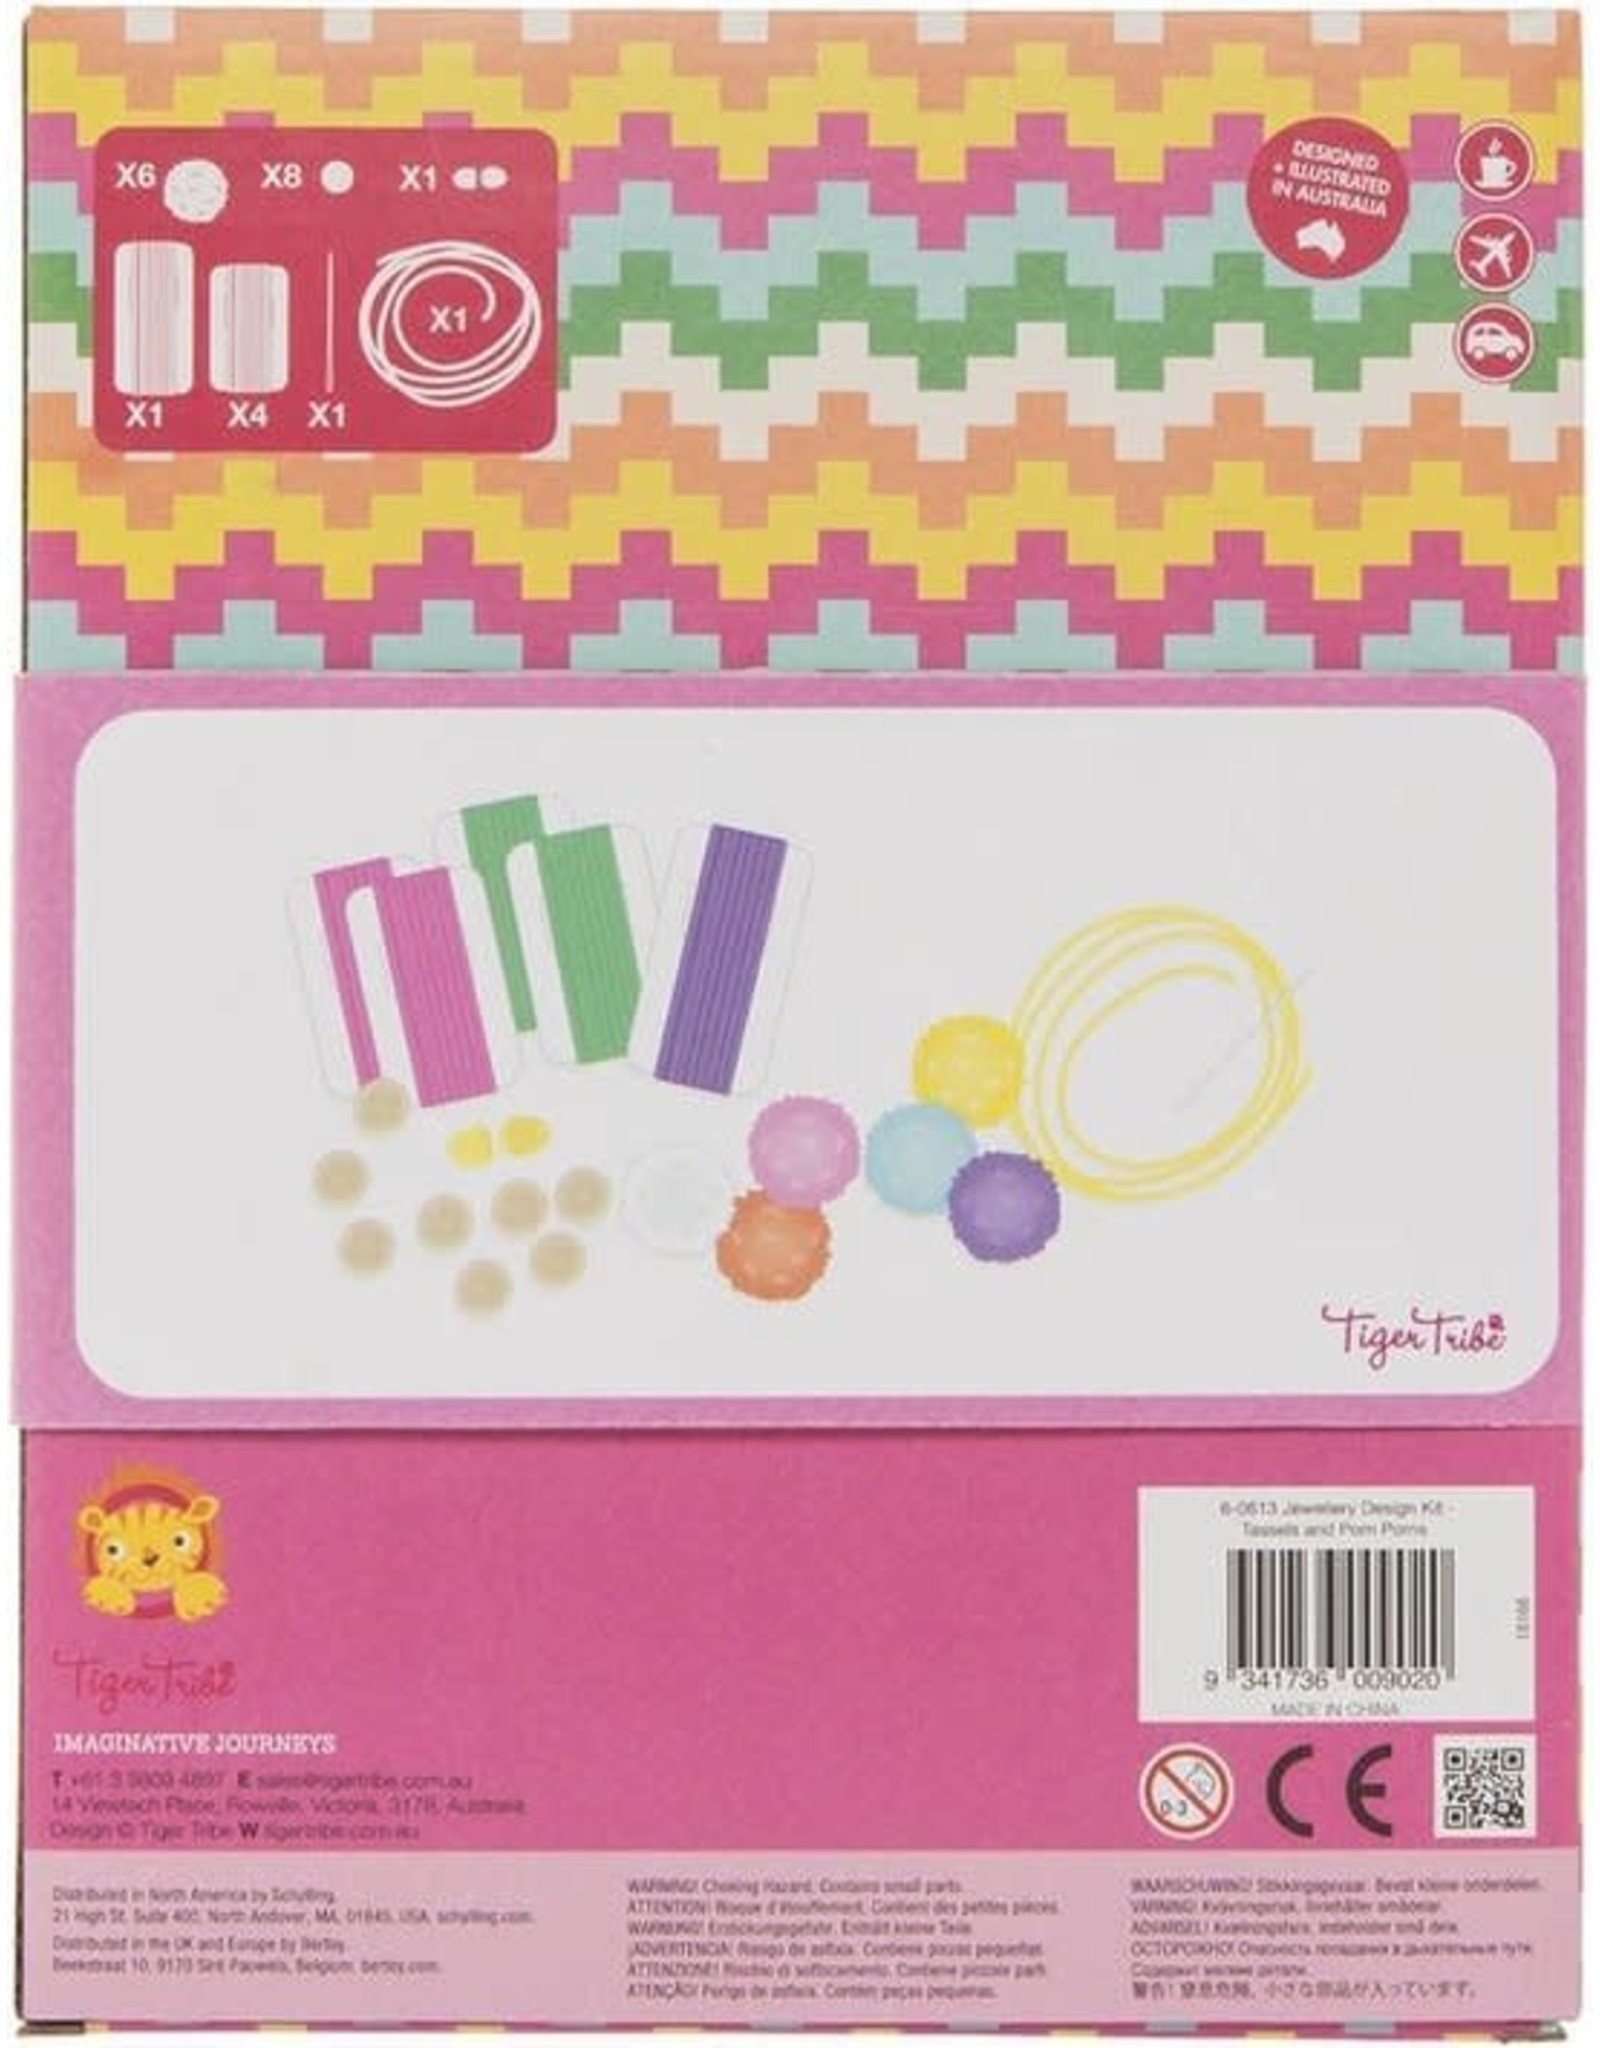 Tiger Tribe Jewellery Design Kit "Tassels and Pom Poms"